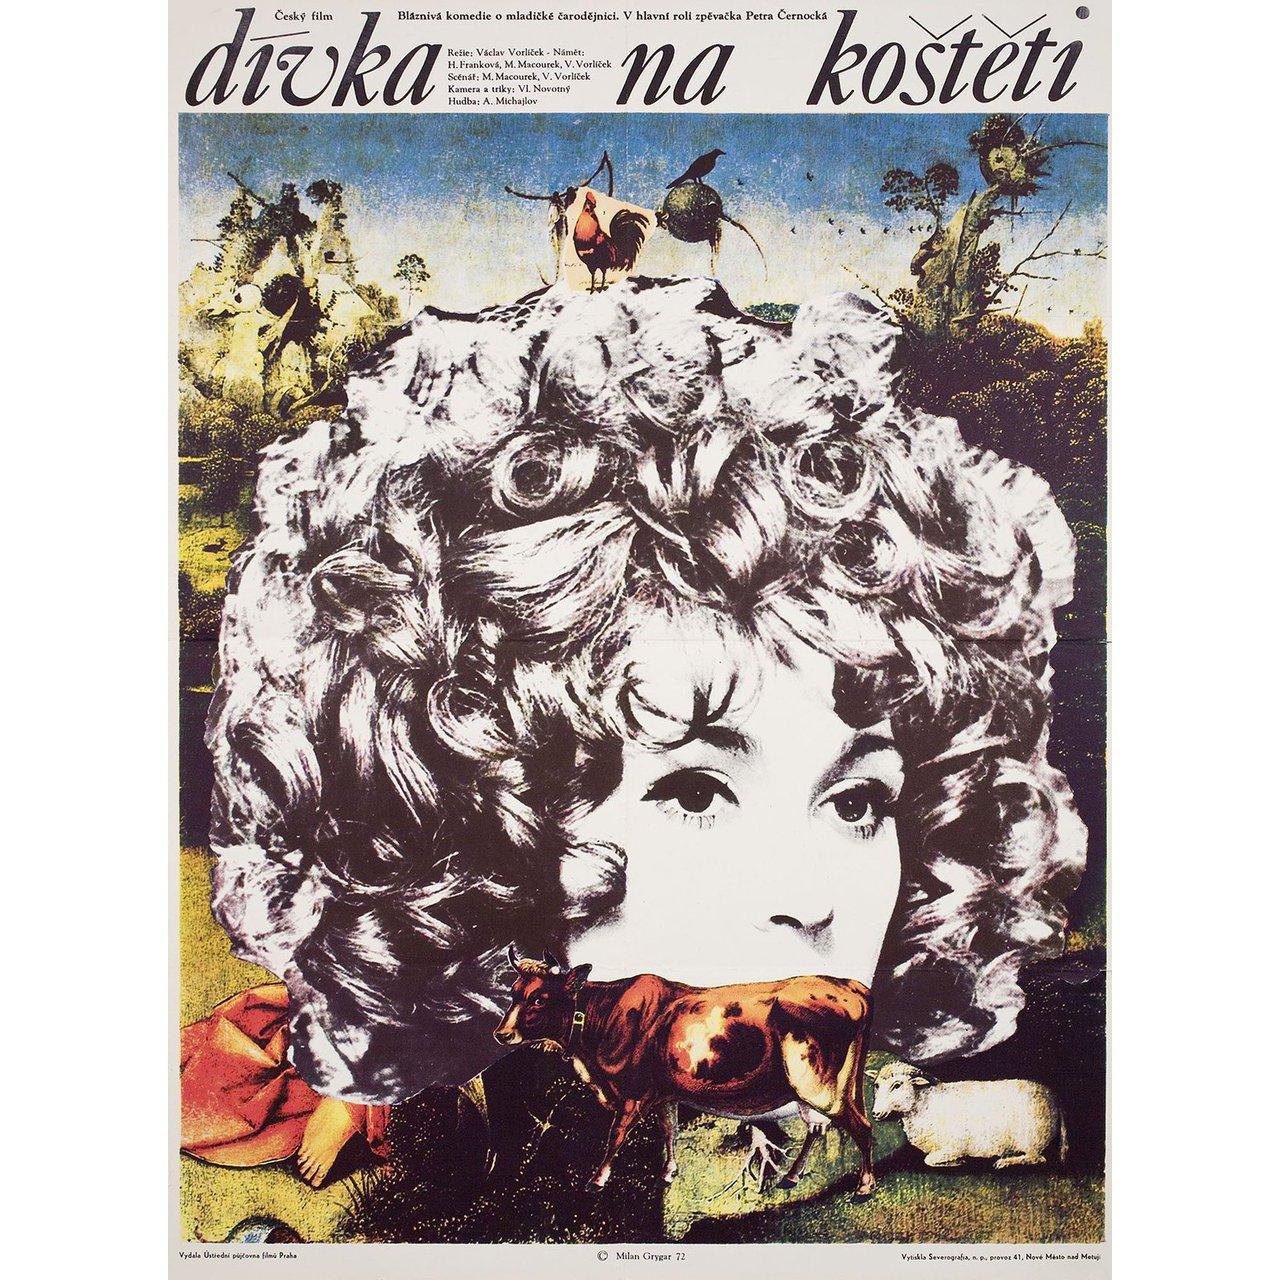 Original 1972 Czech A1 poster by Milan Grygar for the film ‘The Girl on the Broomstick’ (Divka na kosteti) directed by Vaclav Vorlicek with Petra Cernocka / Jan Hrusinsky / Jan Kraus / Vlastimil Zavrel. Very good-fine condition, folded. Many